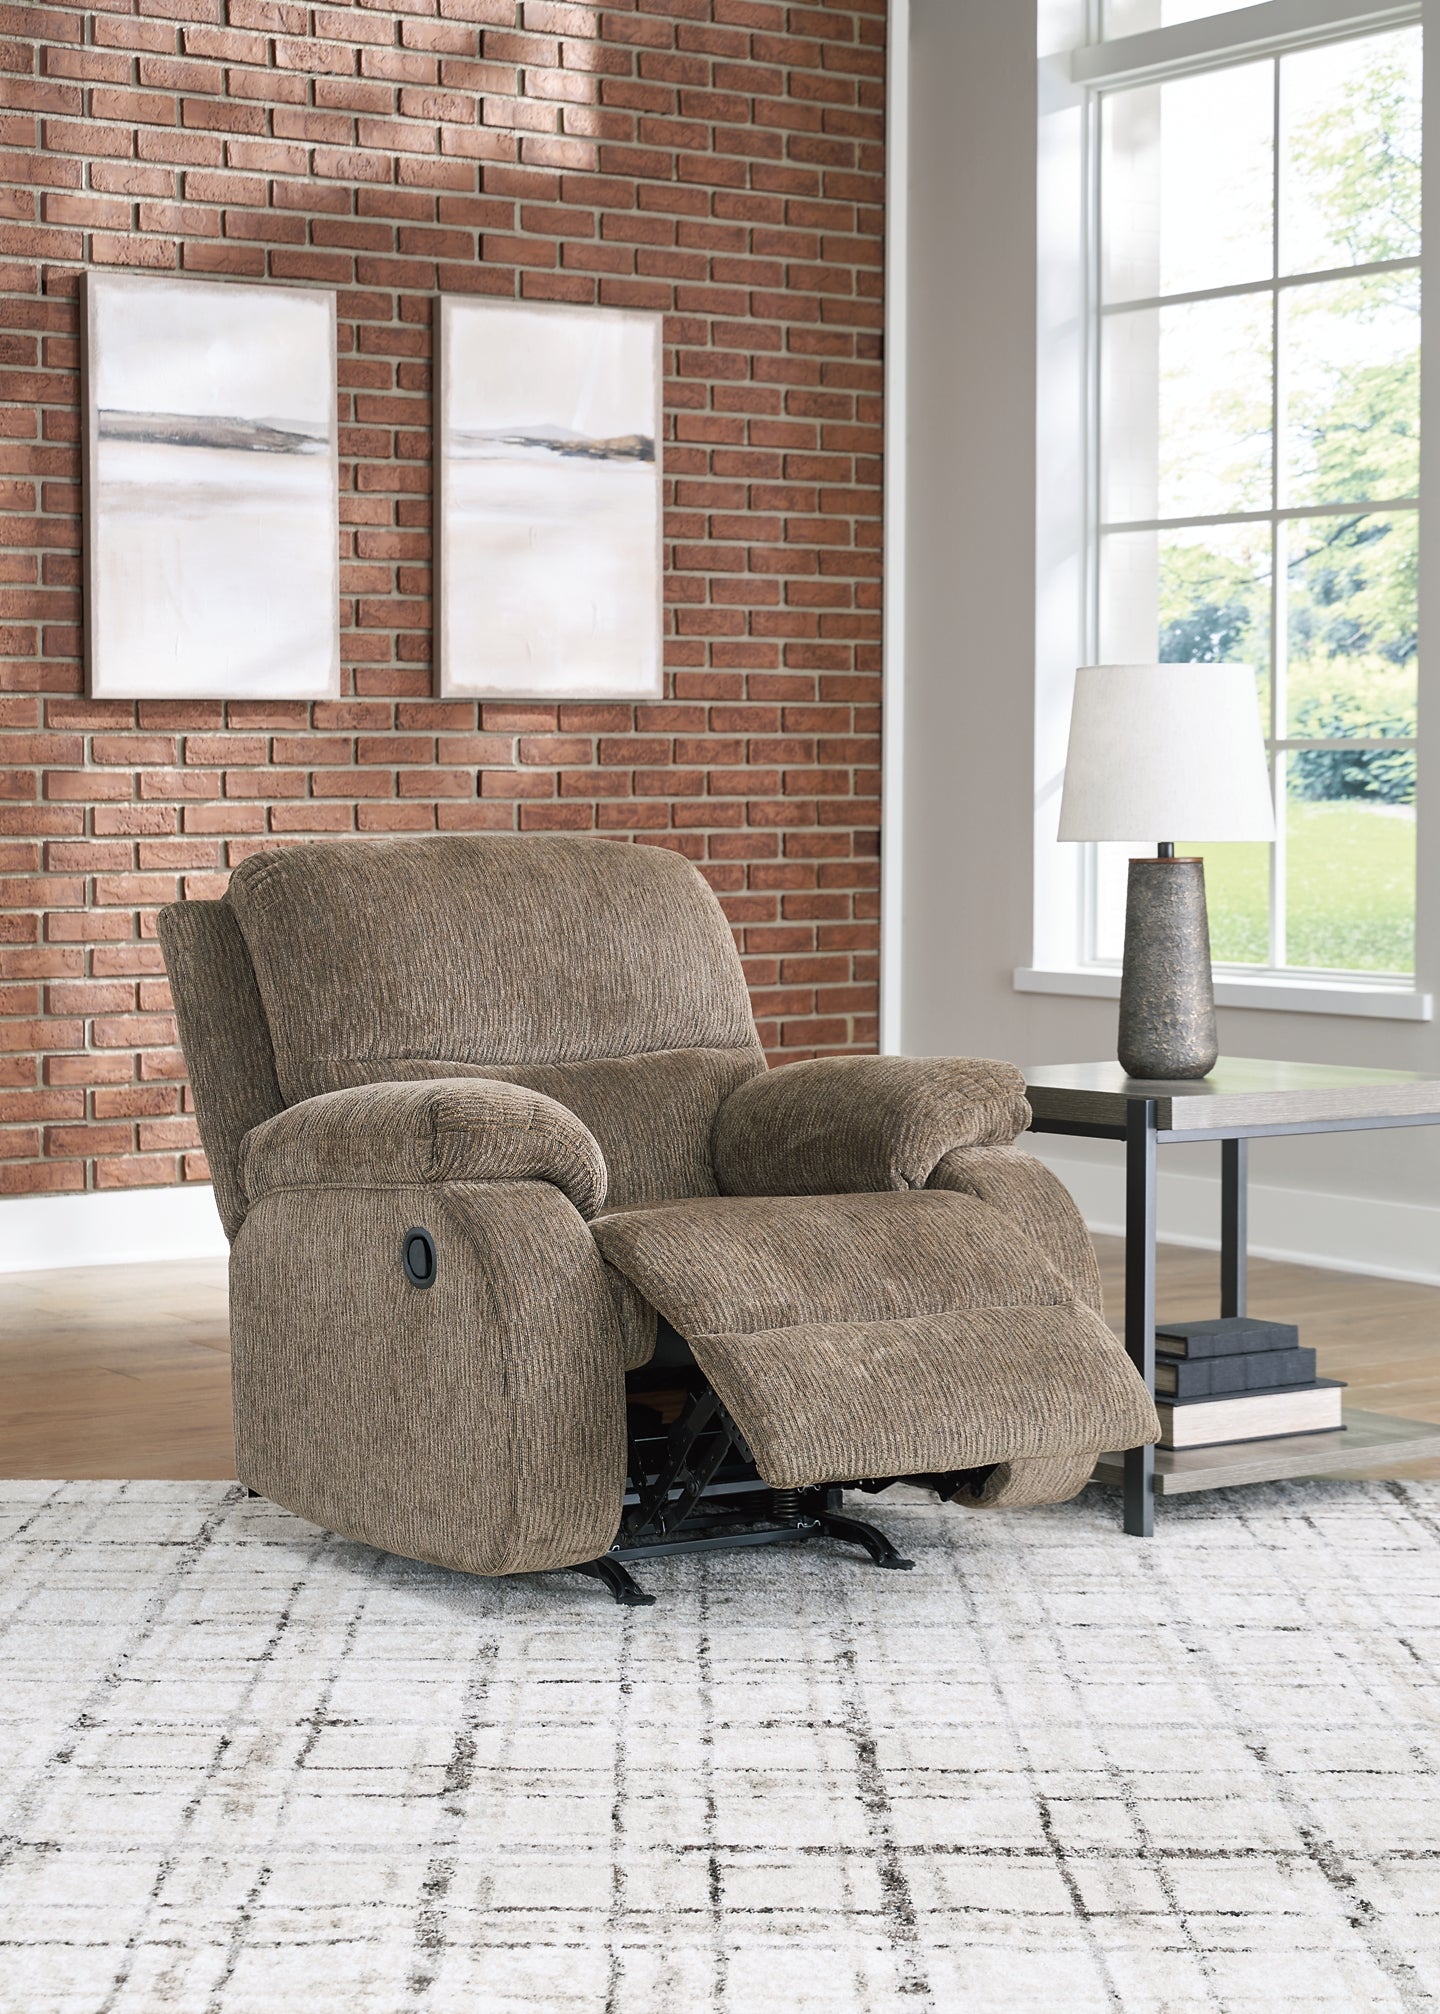 Scranto Rocker Recliner at Cloud 9 Mattress & Furniture furniture, home furnishing, home decor